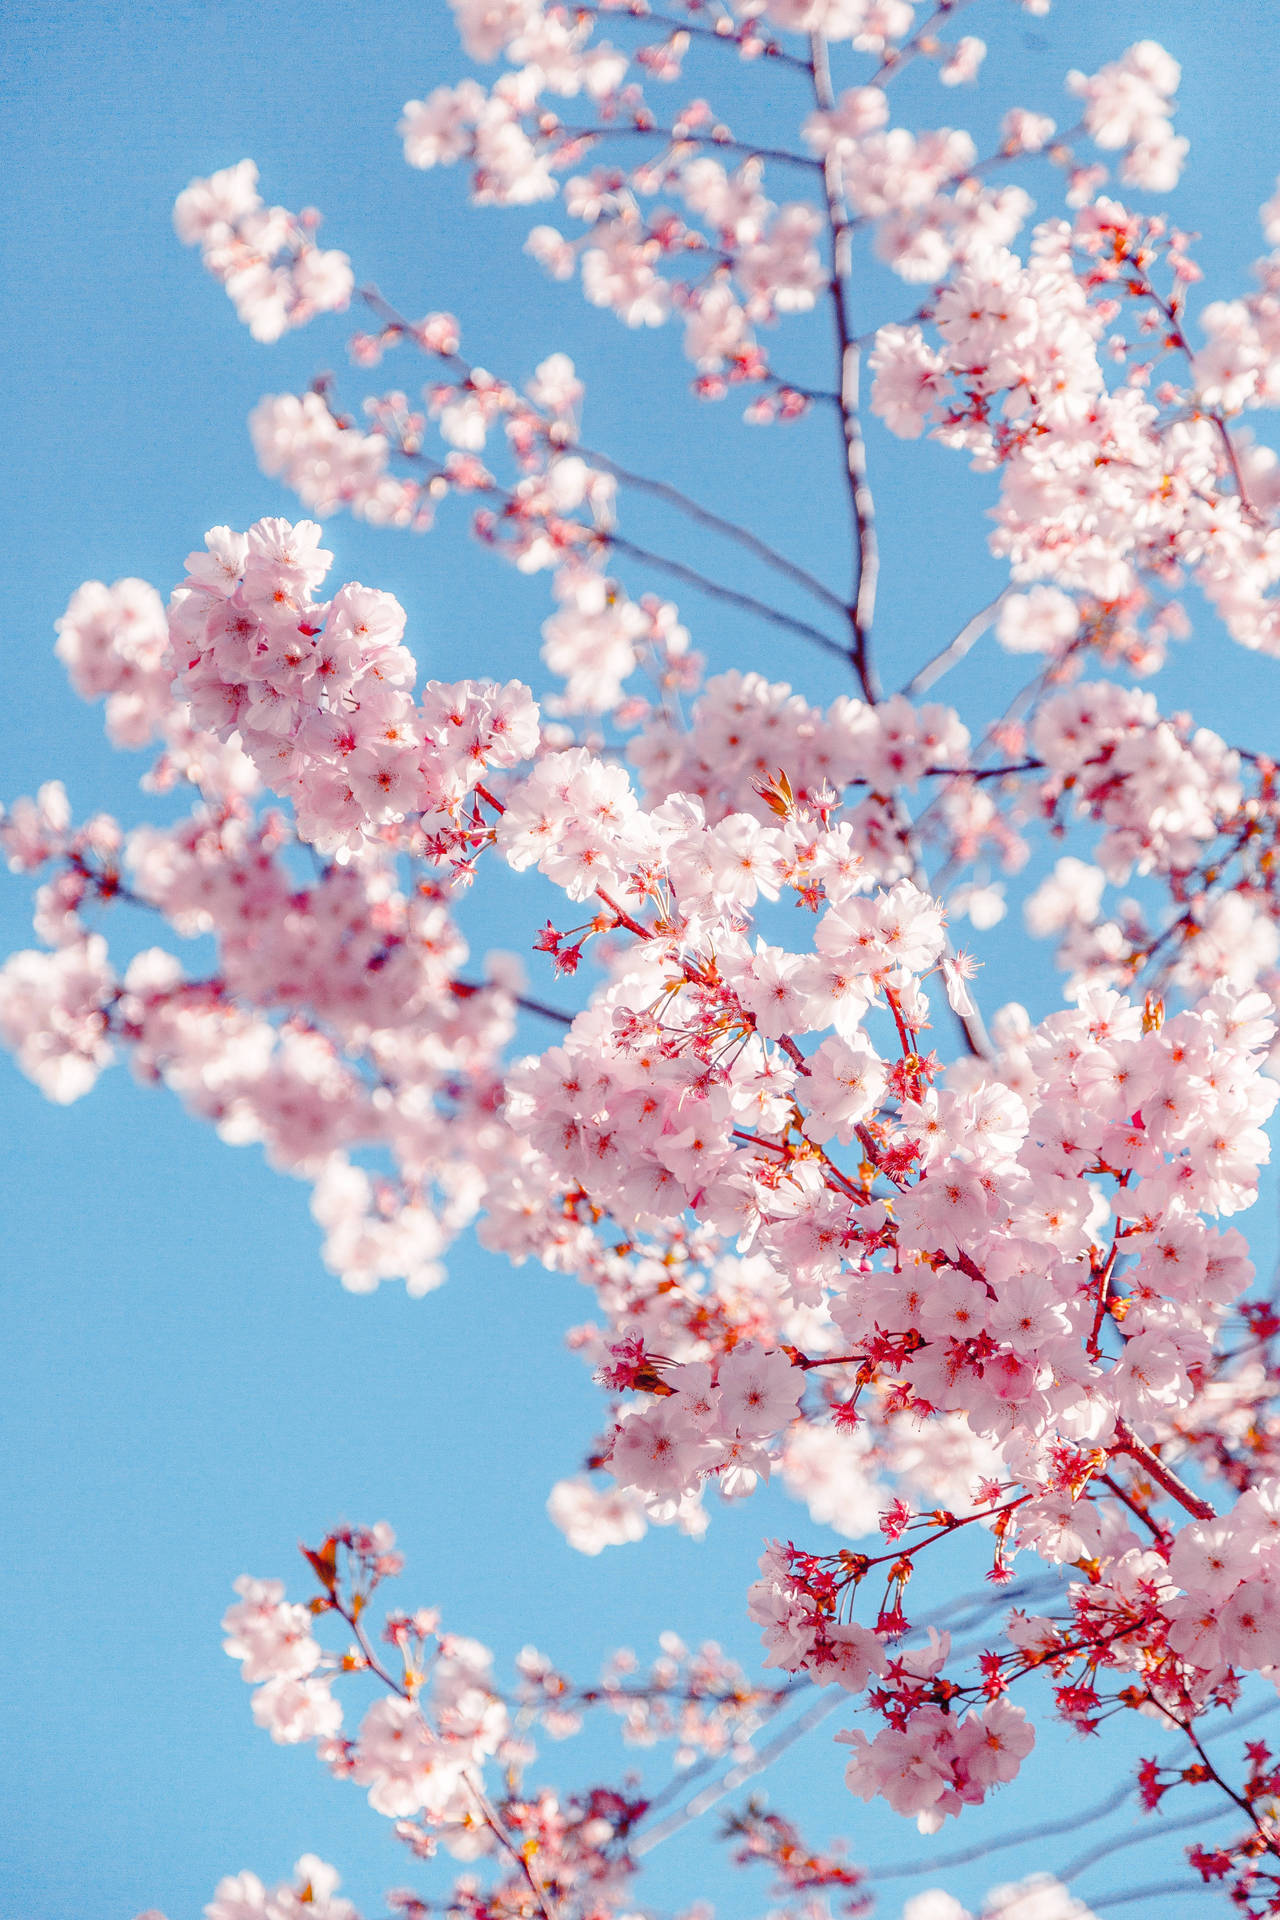 Download wallpaper 950x1534 anime girl original cherry blossom sakura  iphone 950x1534 hd background 6681